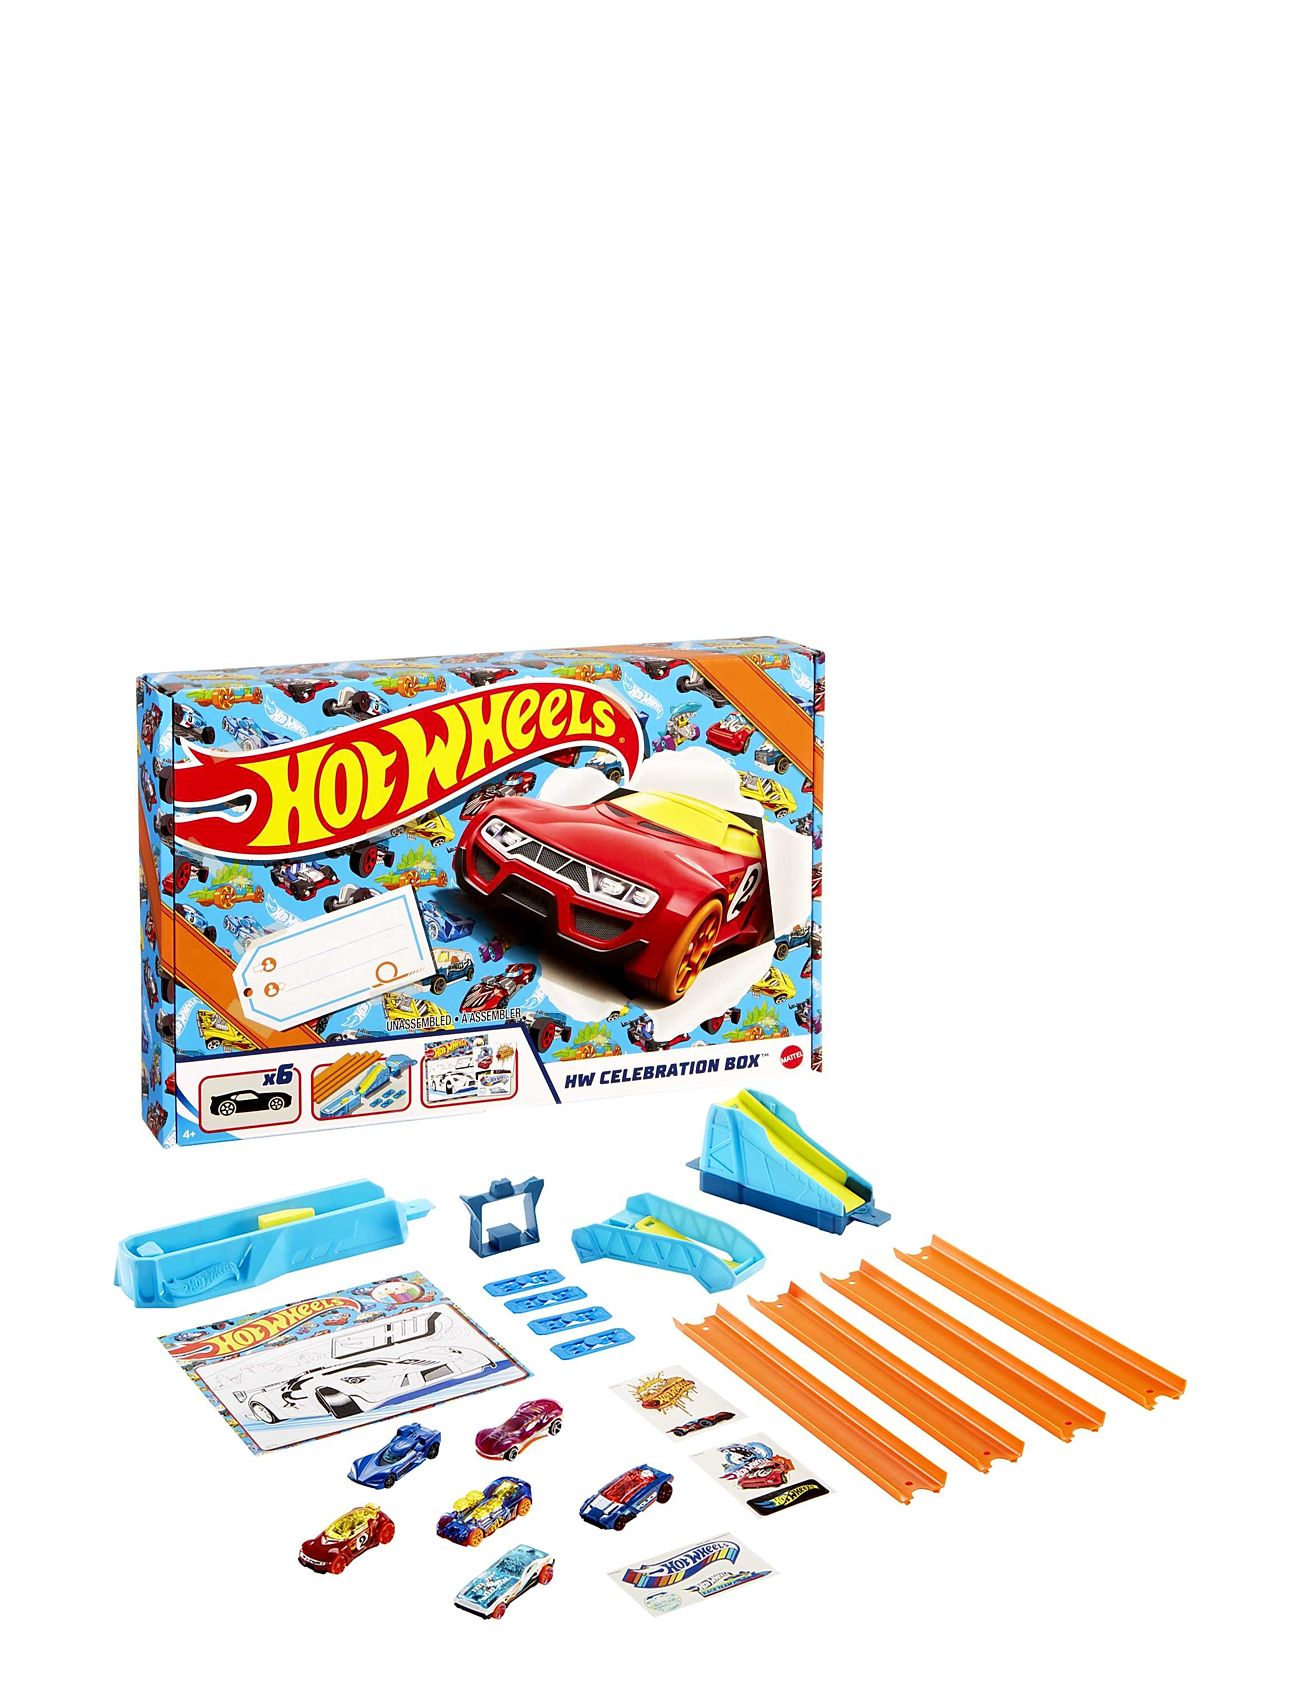 Hw Celebration Box Toys Toy Cars & Vehicles Multi/mönstrad Hot Wheels